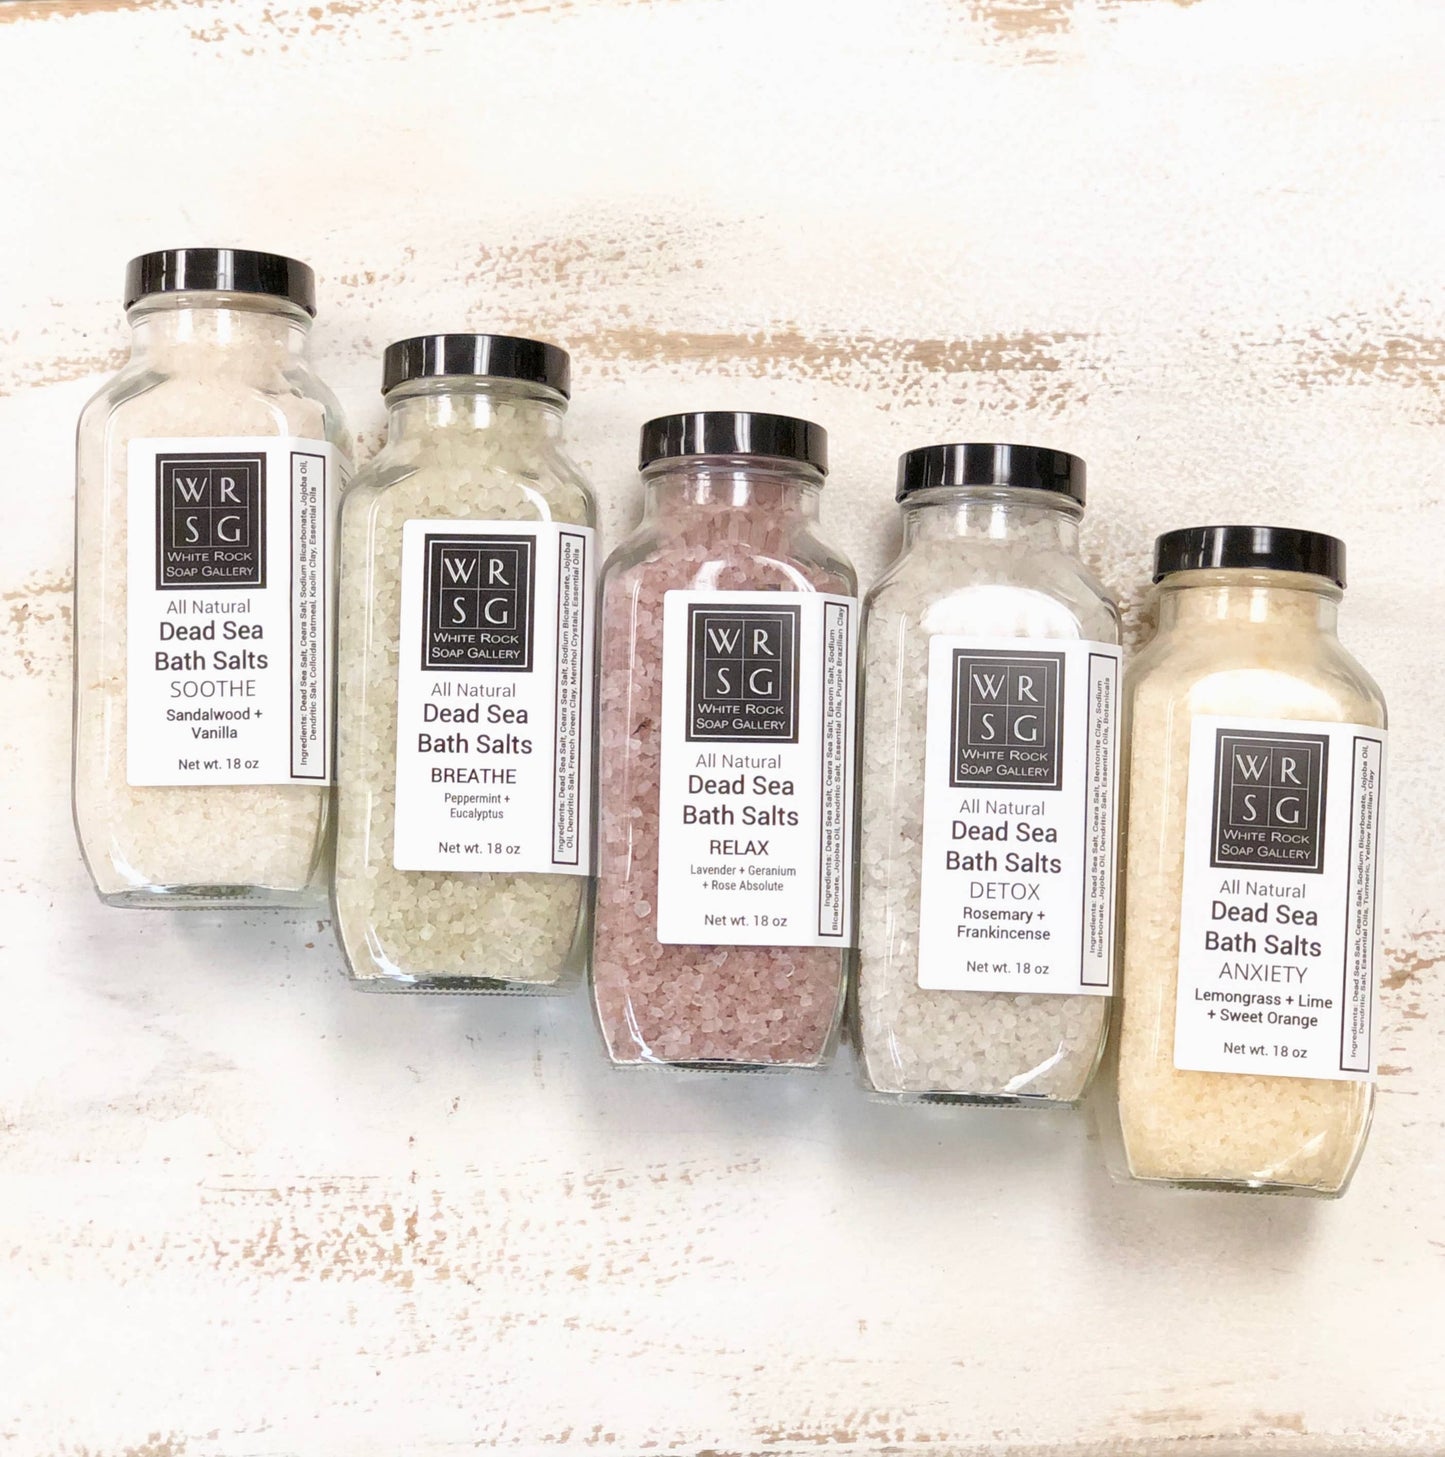 White Rock Soap Gallery - Dead Sea Bath Salts Square Jar: SOOTHE - Sandalwood + Vanilla